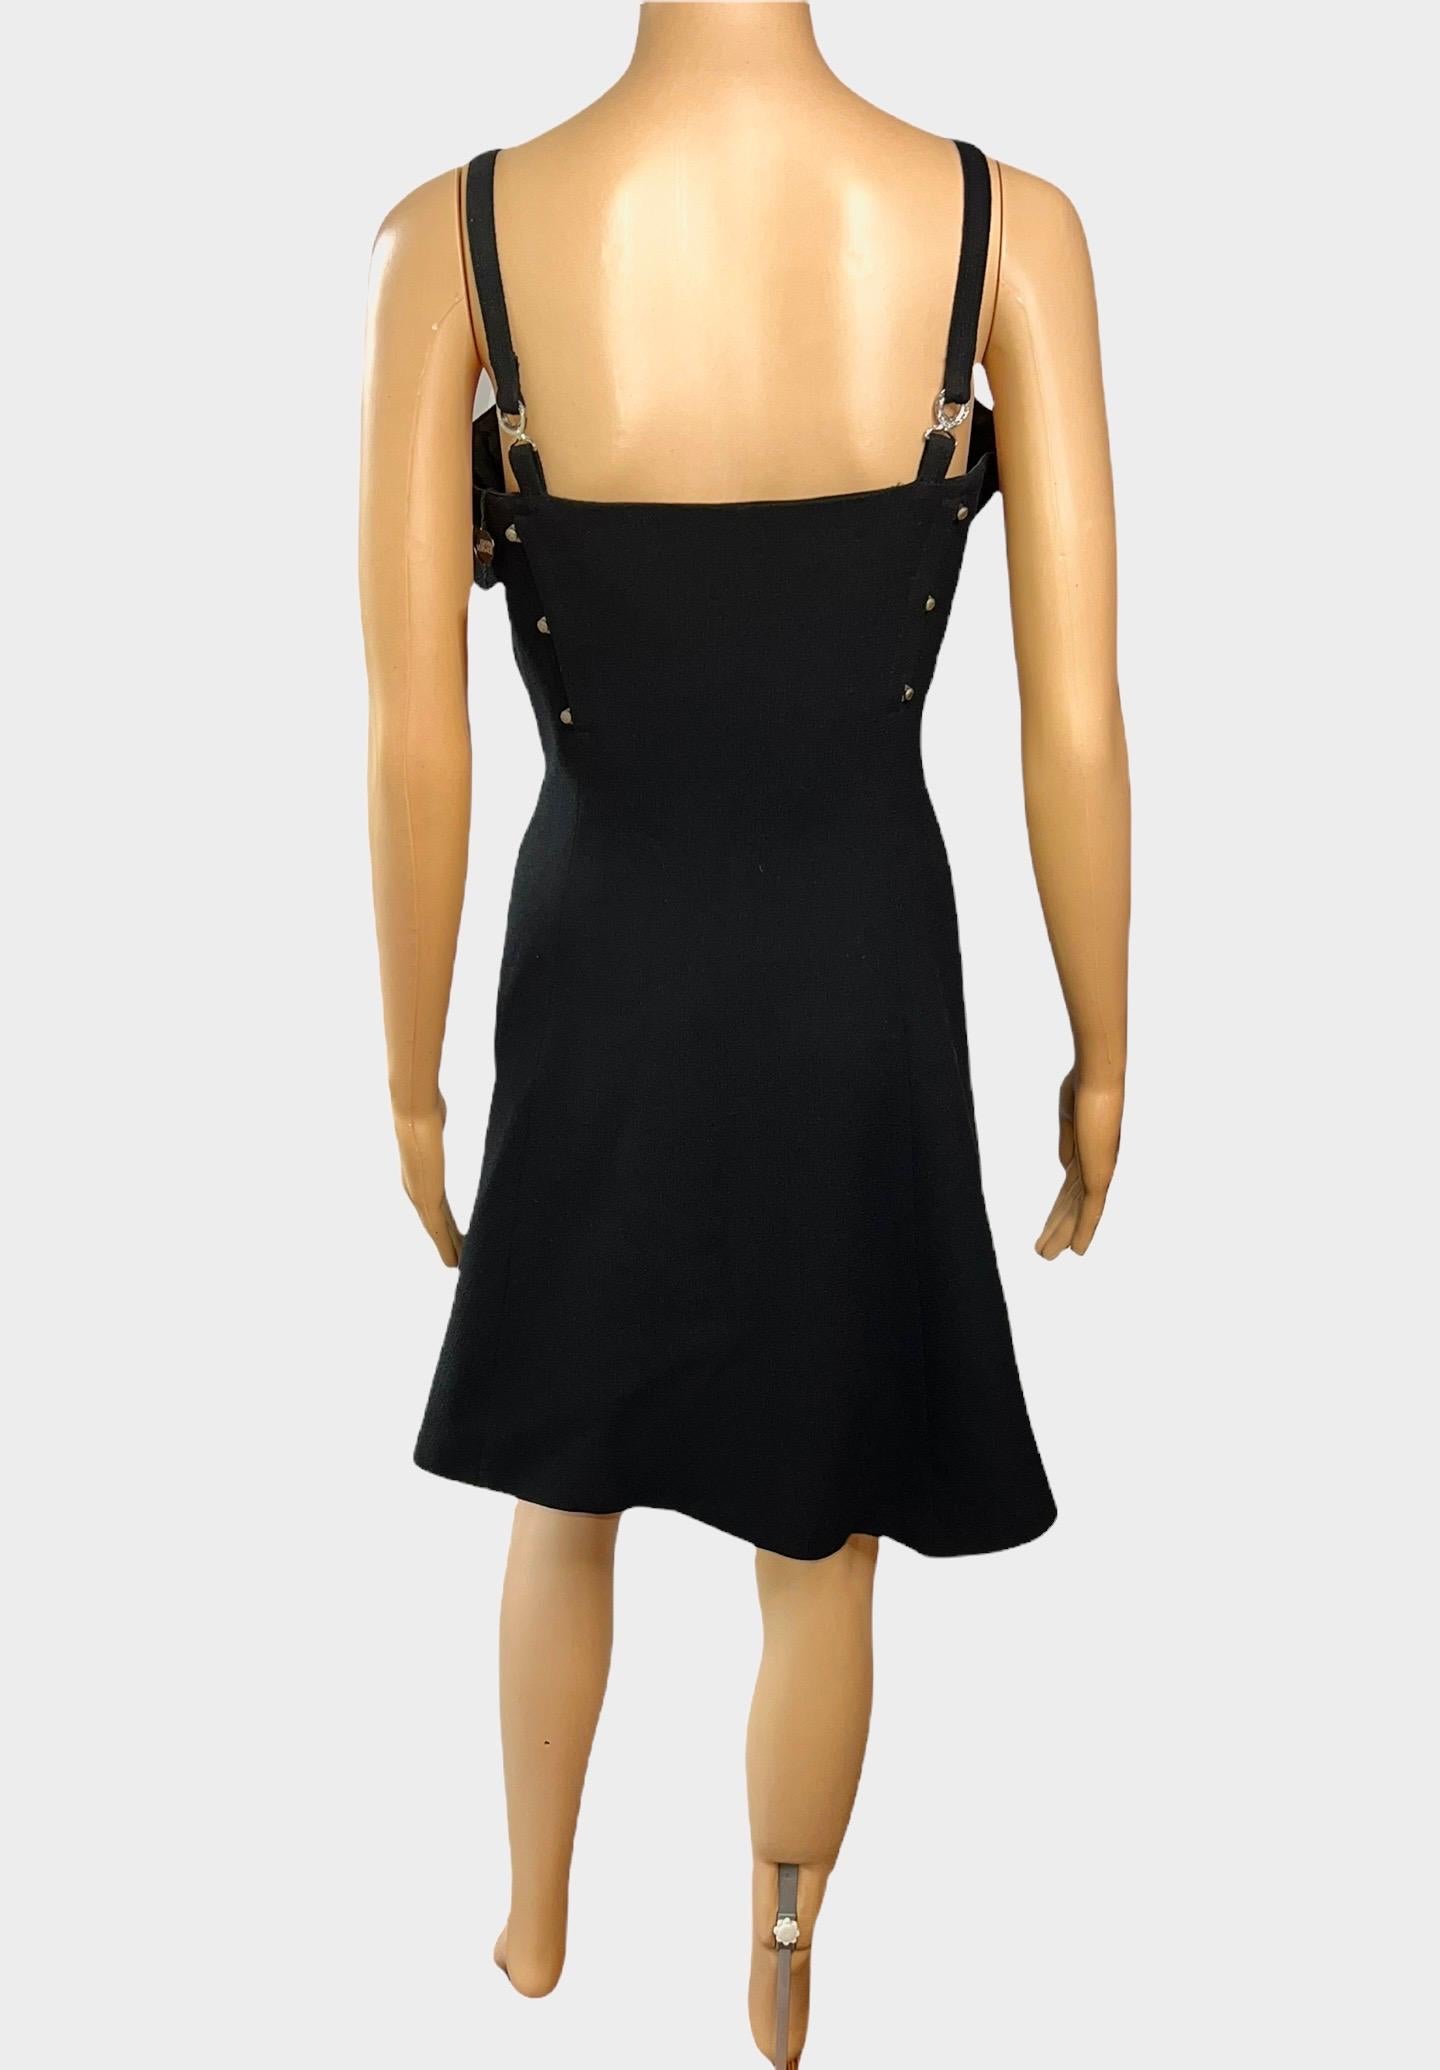 Women's Gianni Versace S/S 1995 Unworn Vintage Bustier Black Mini Dress For Sale